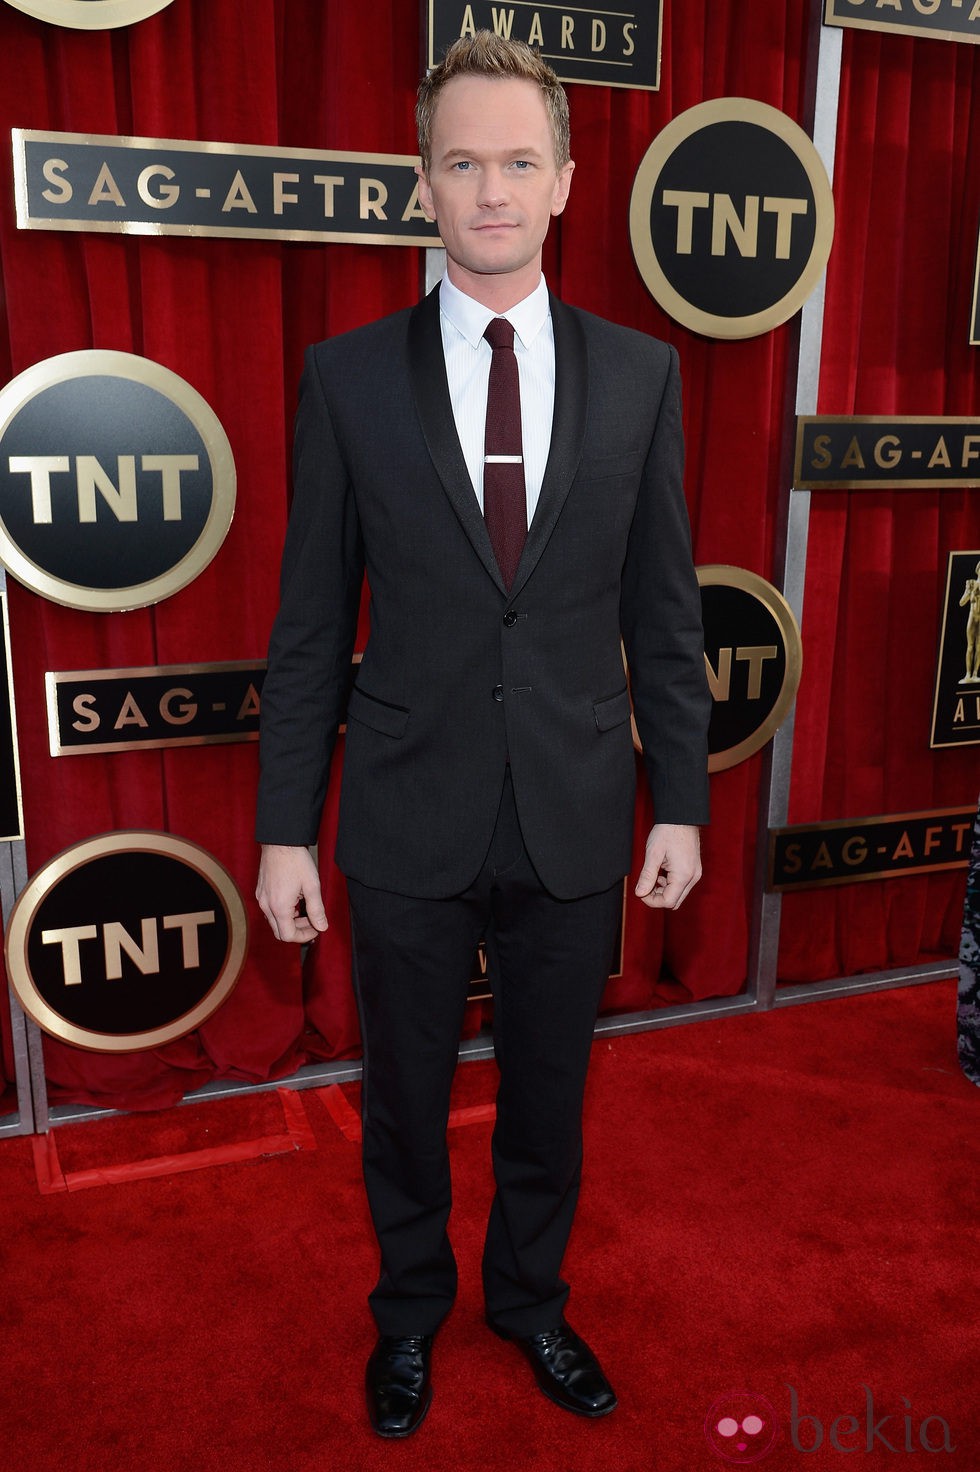 Neil Patrick Harris en los Screen Actors Guild Awards 2013